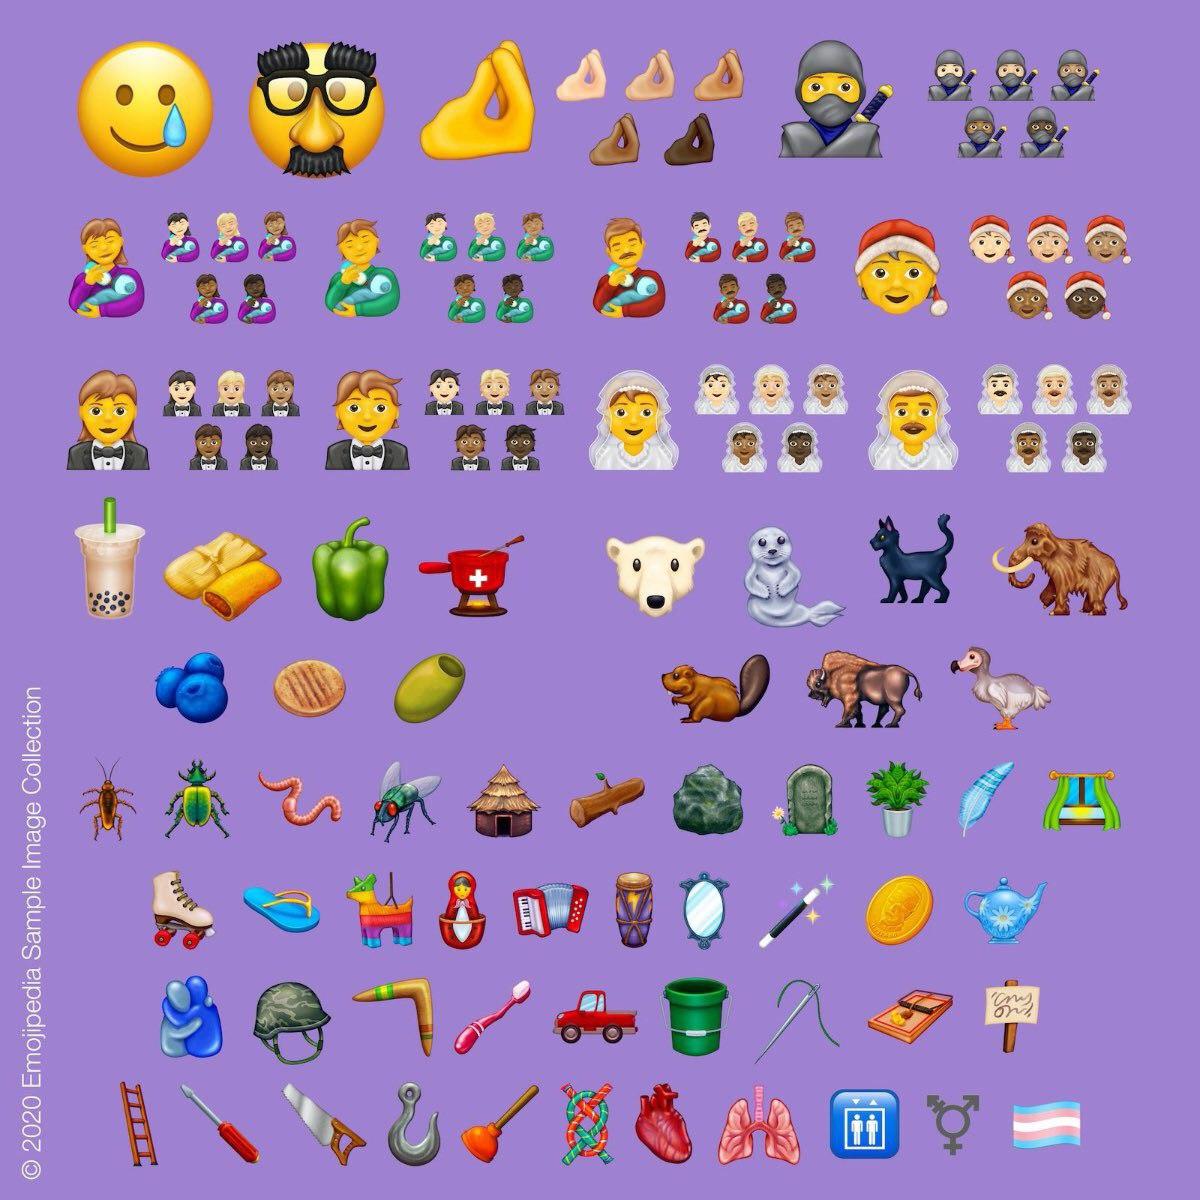 Unicode представил новые эмодзи 2020 года